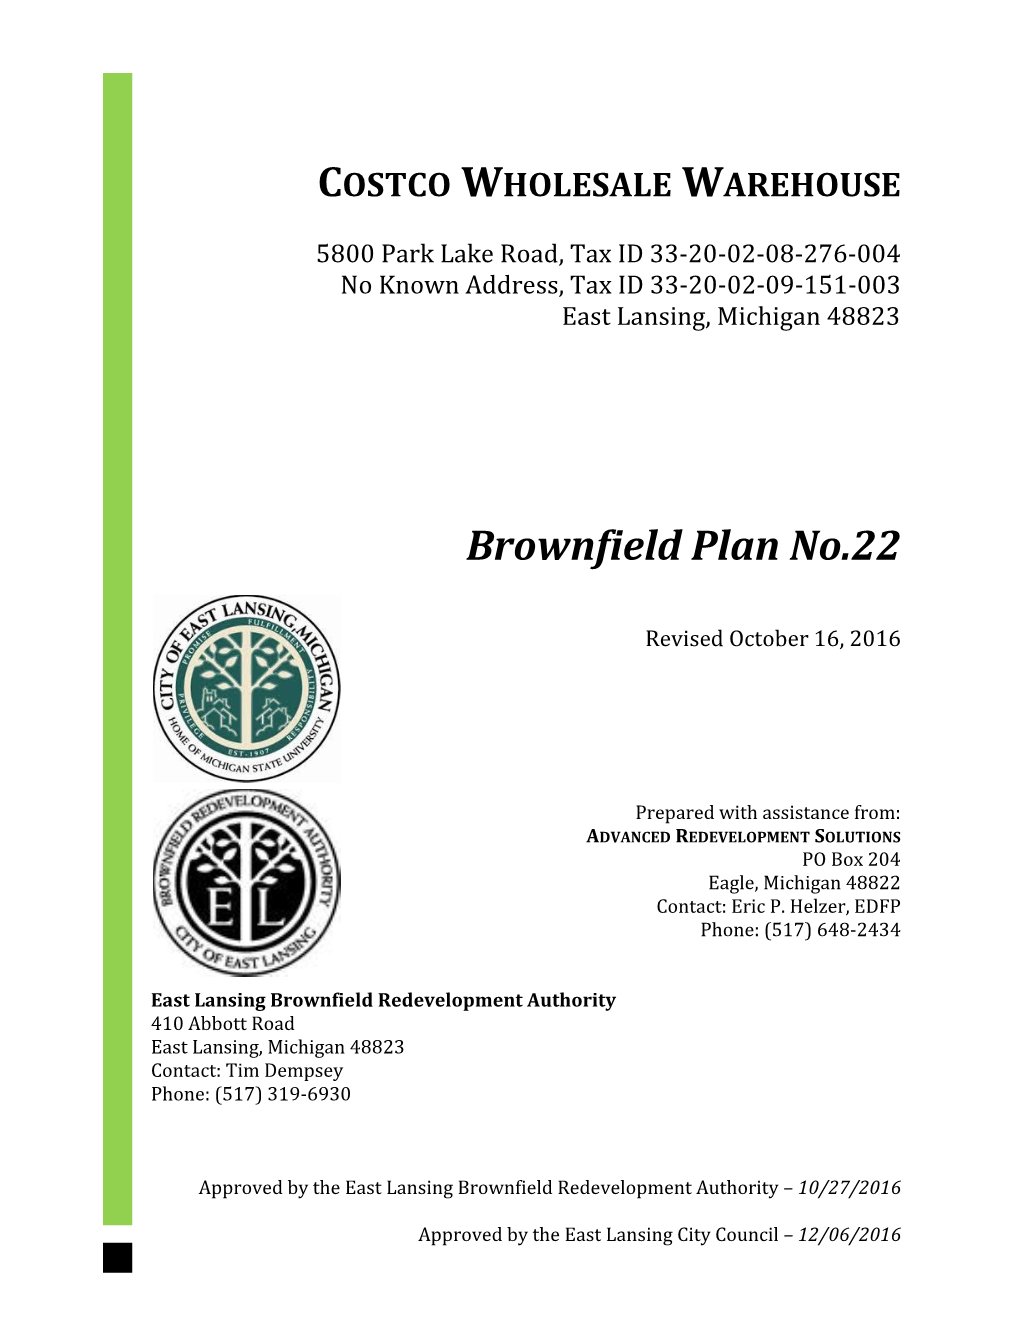 Brownfield Redevelopment Plan